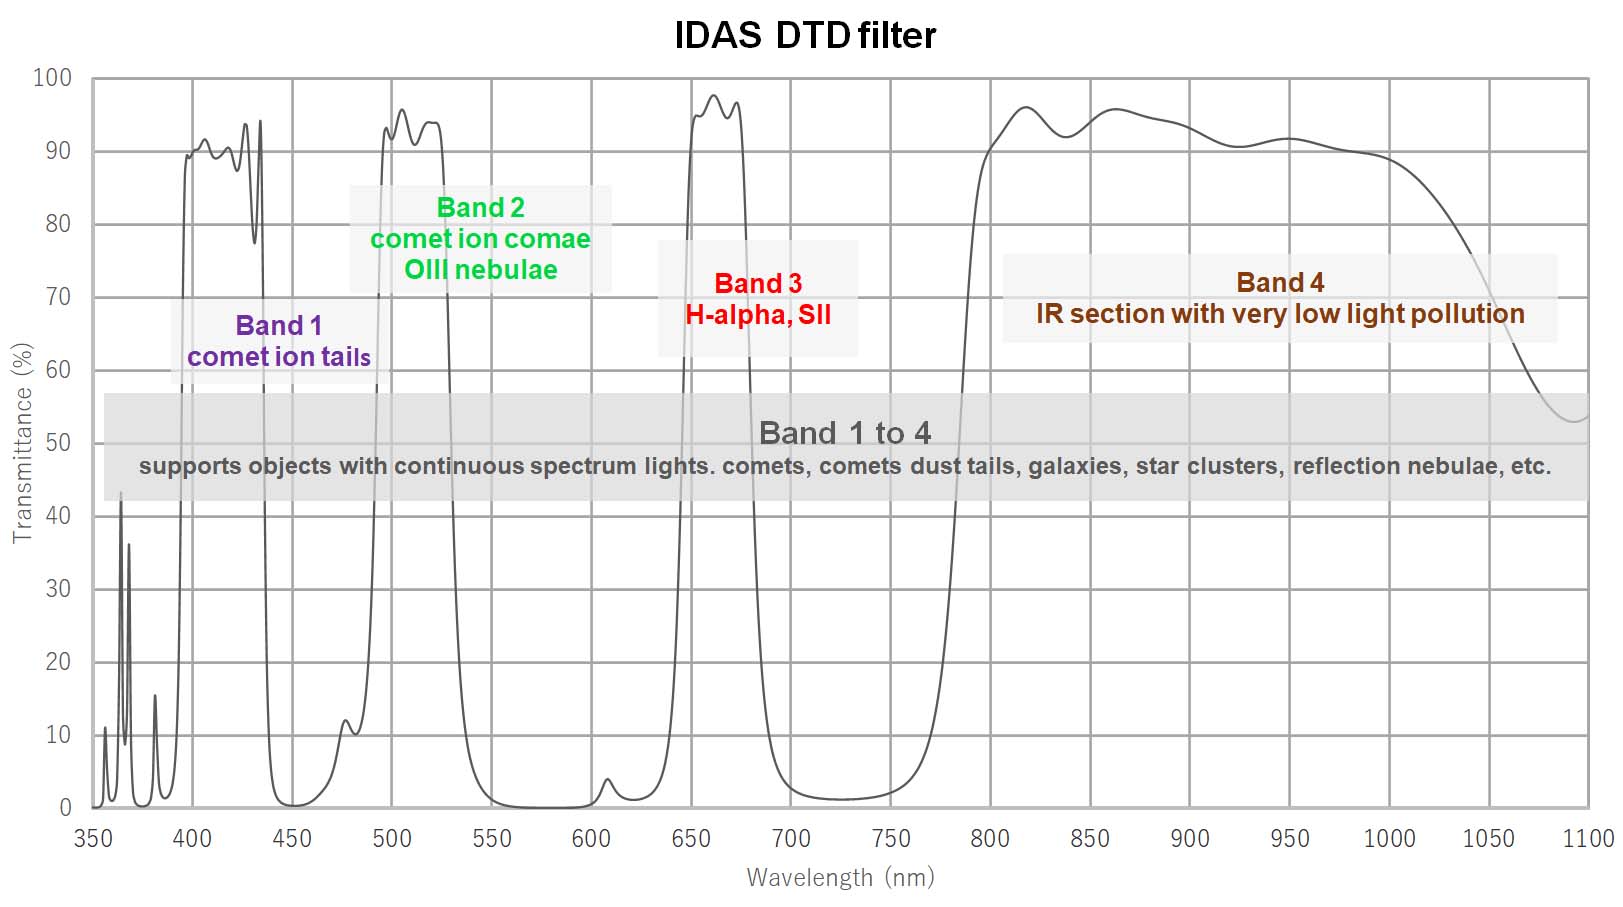 IDAS DTD (Dusk to Dawn) Filter Wavelength